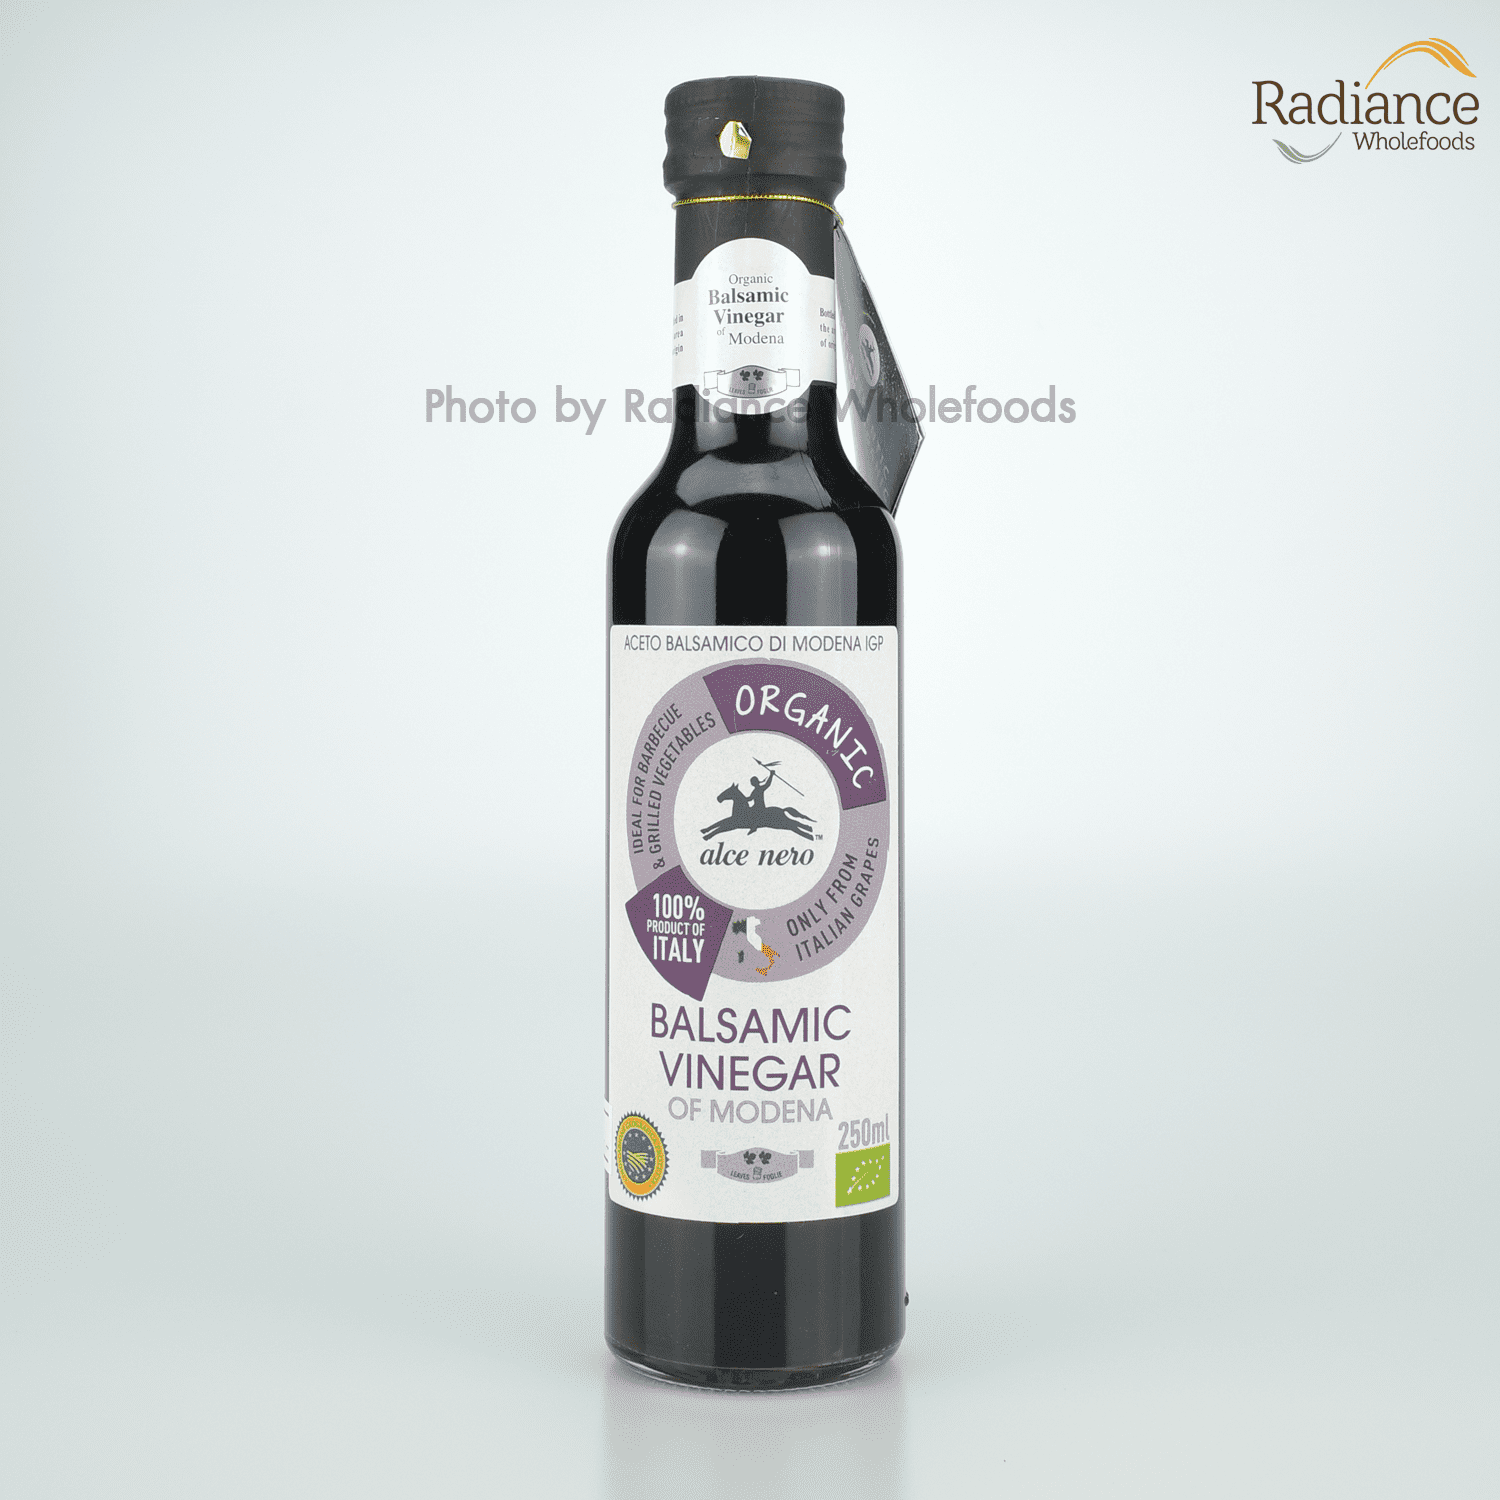 Balsamic Vinegar of Modena 250ml, alce nero